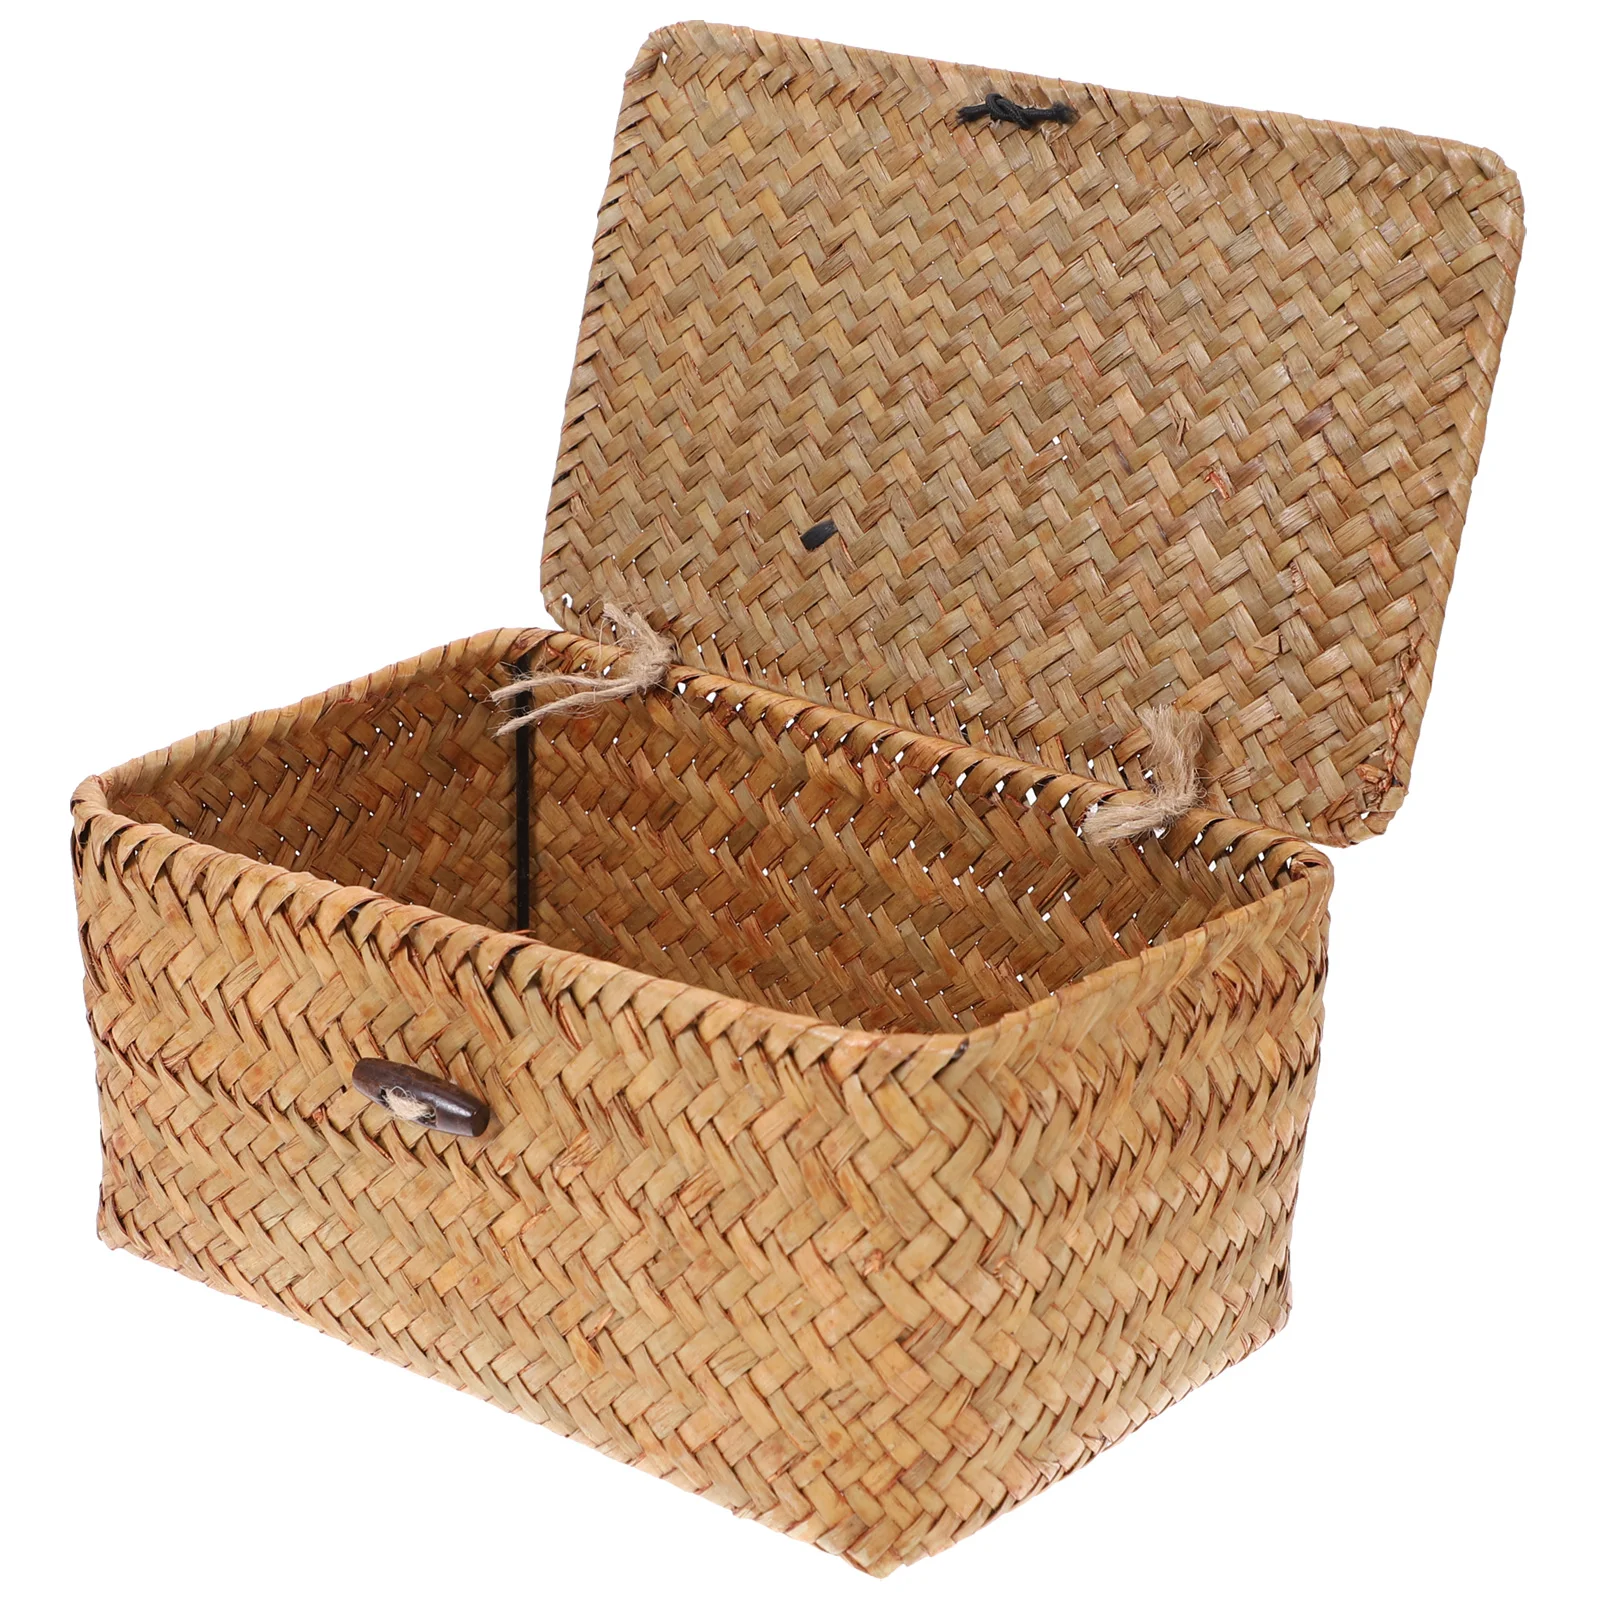 

Basket Storage Wicker Baskets Woven Box Rattan Seagrass Organizer Lid Bins Shelf Bin Hyacinth Desktop Tray Handwoven Organizing